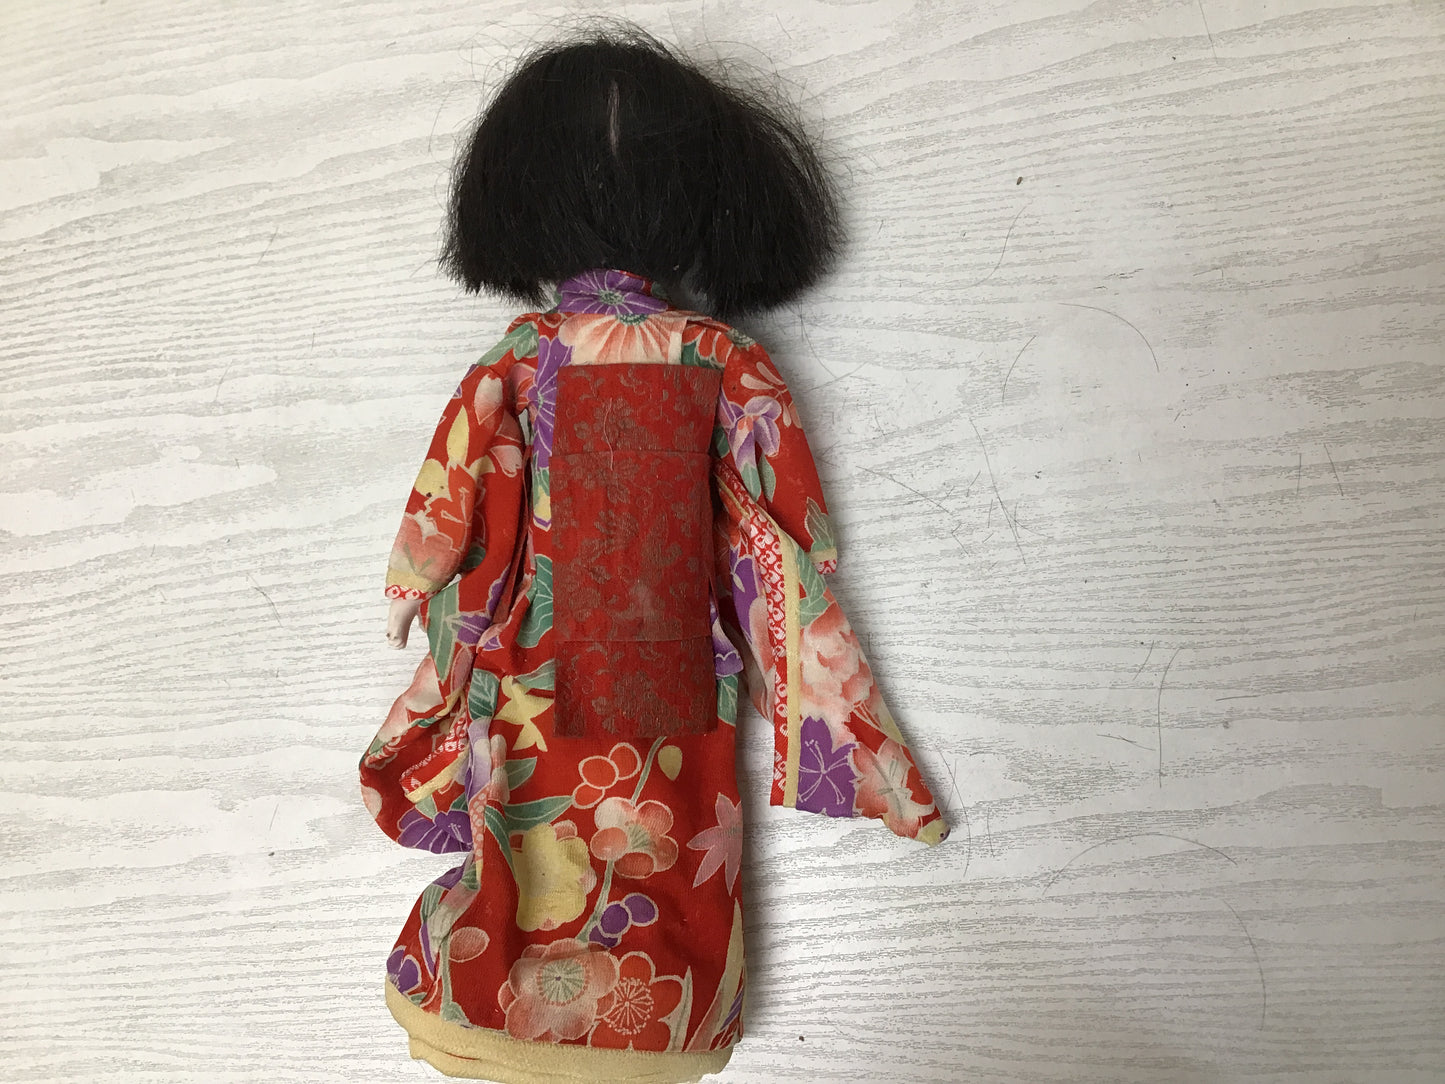 Y2221 NINGYO Ichimatsu Doll girl signed Iwatsuki Japanese vintage antique figure